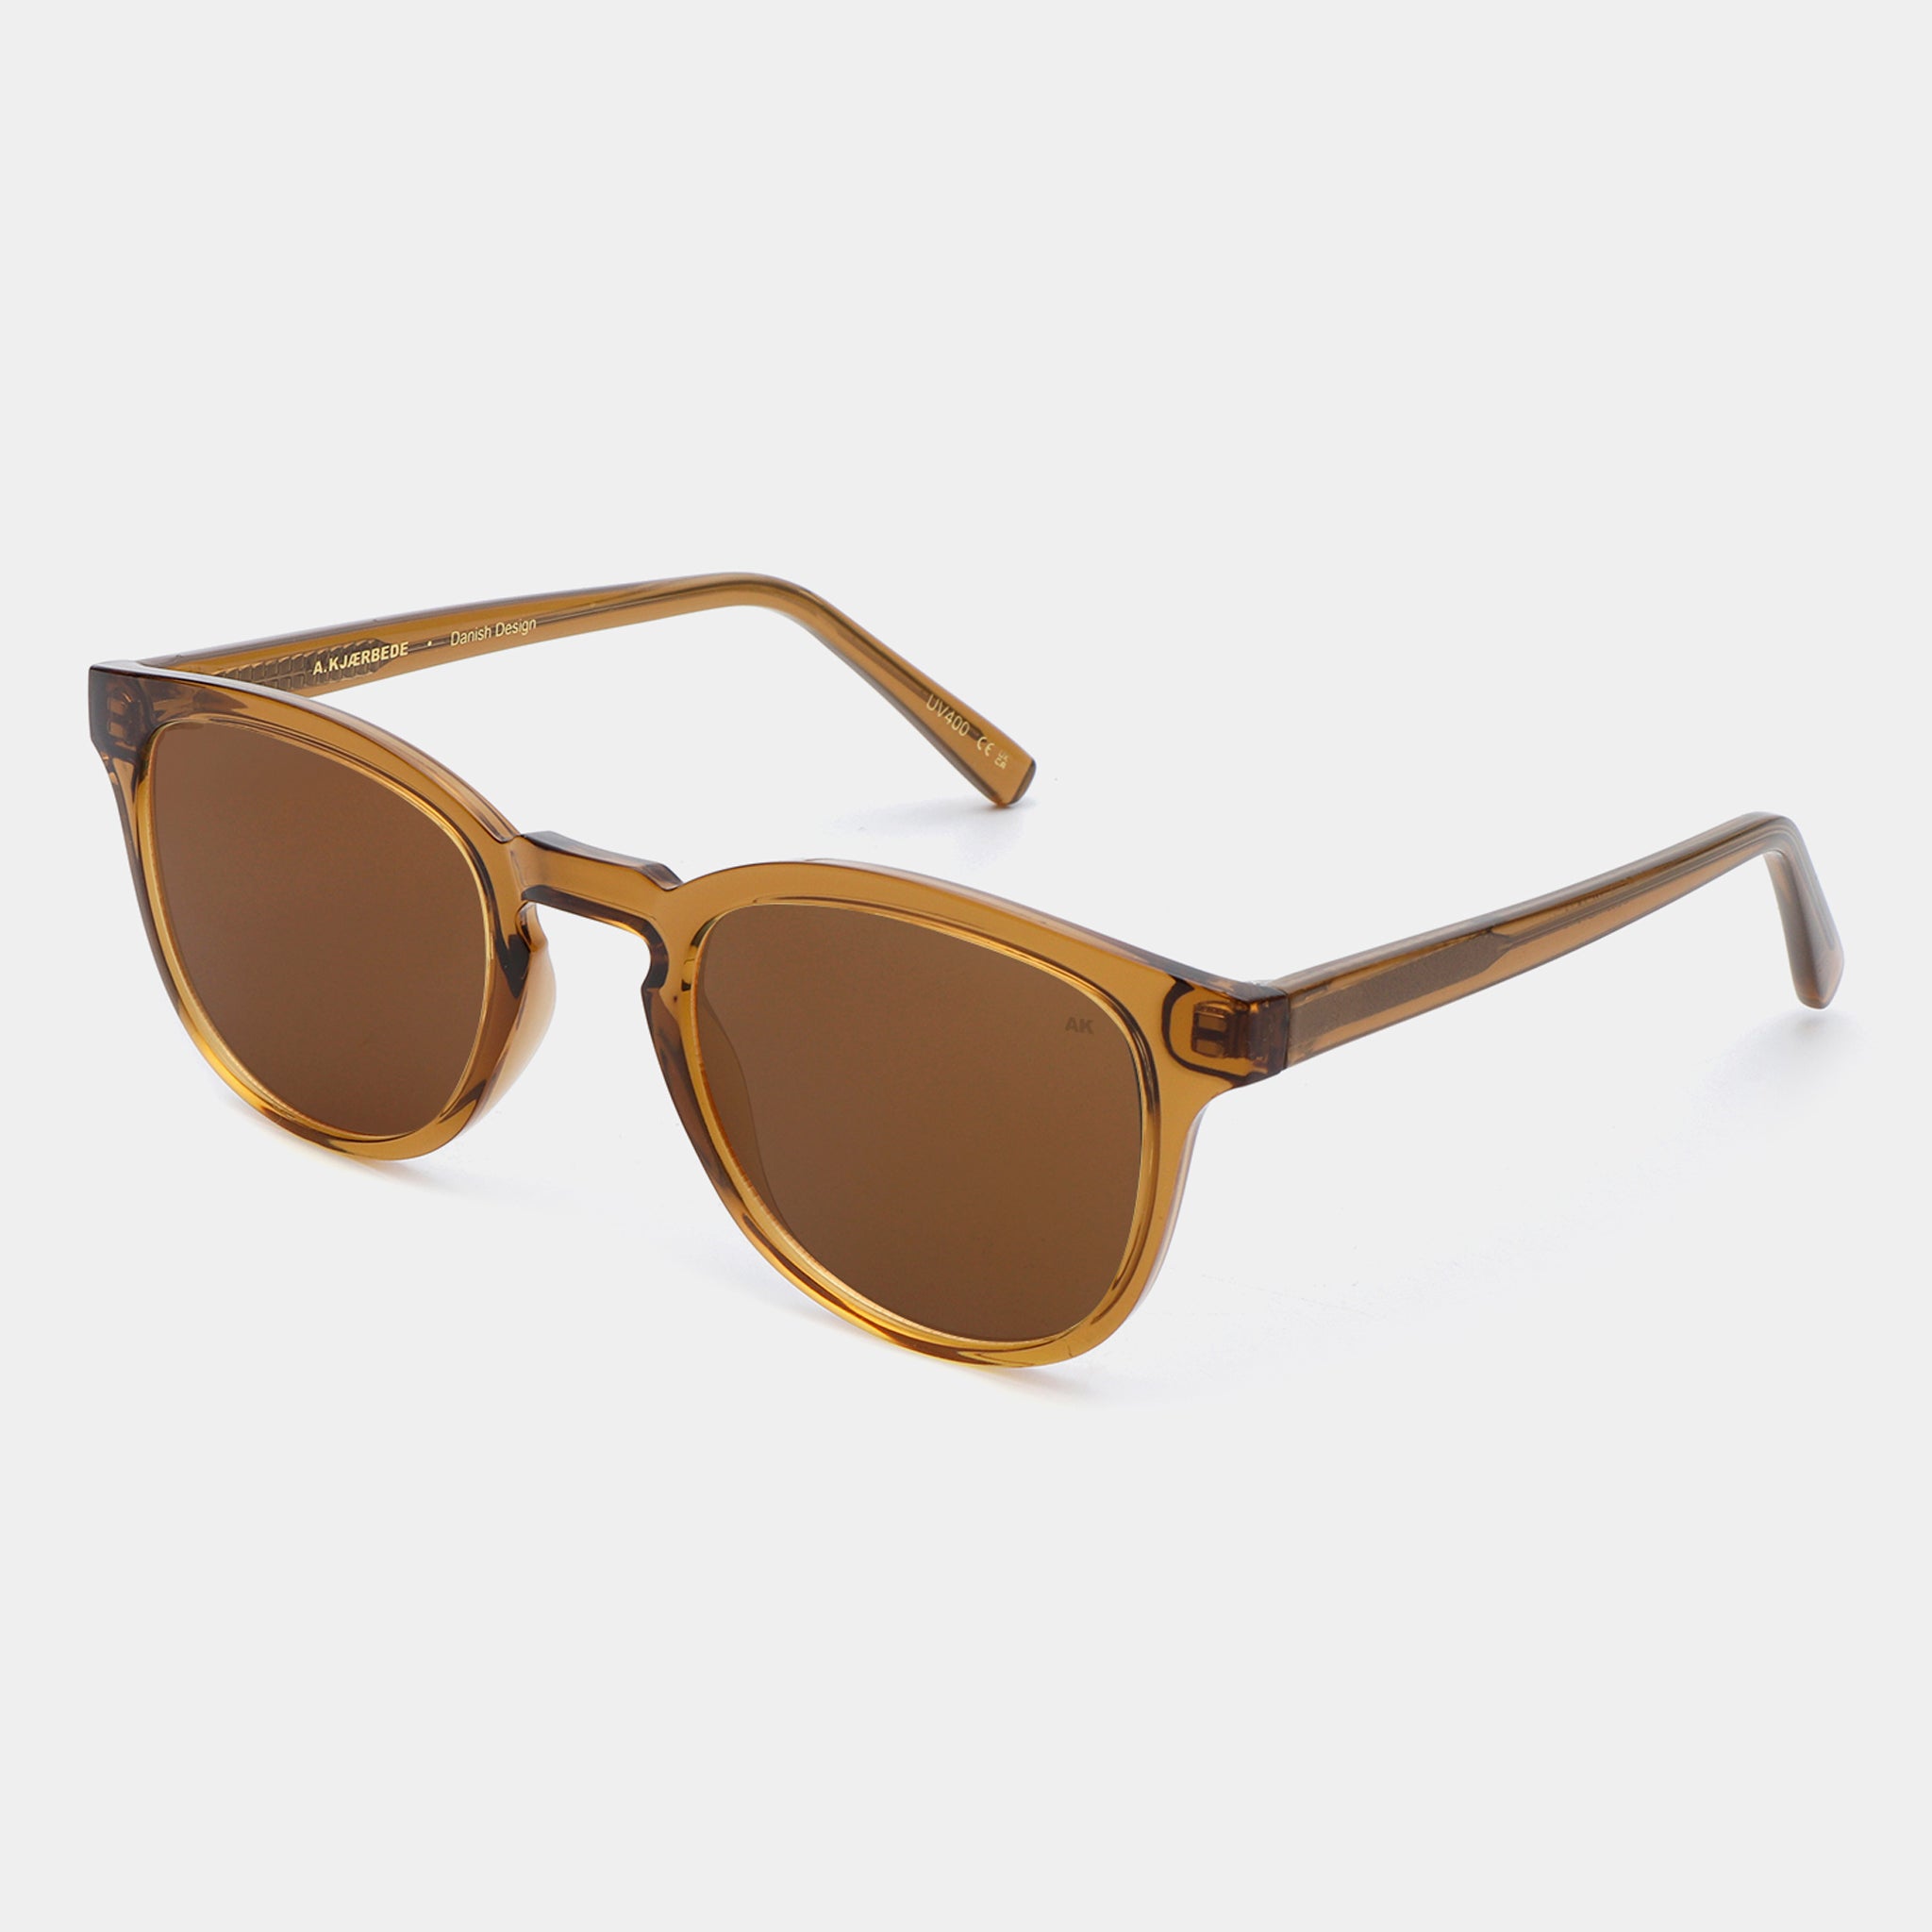 A.Kjaerbede - Sunglasses Bate - Smoke Transparent